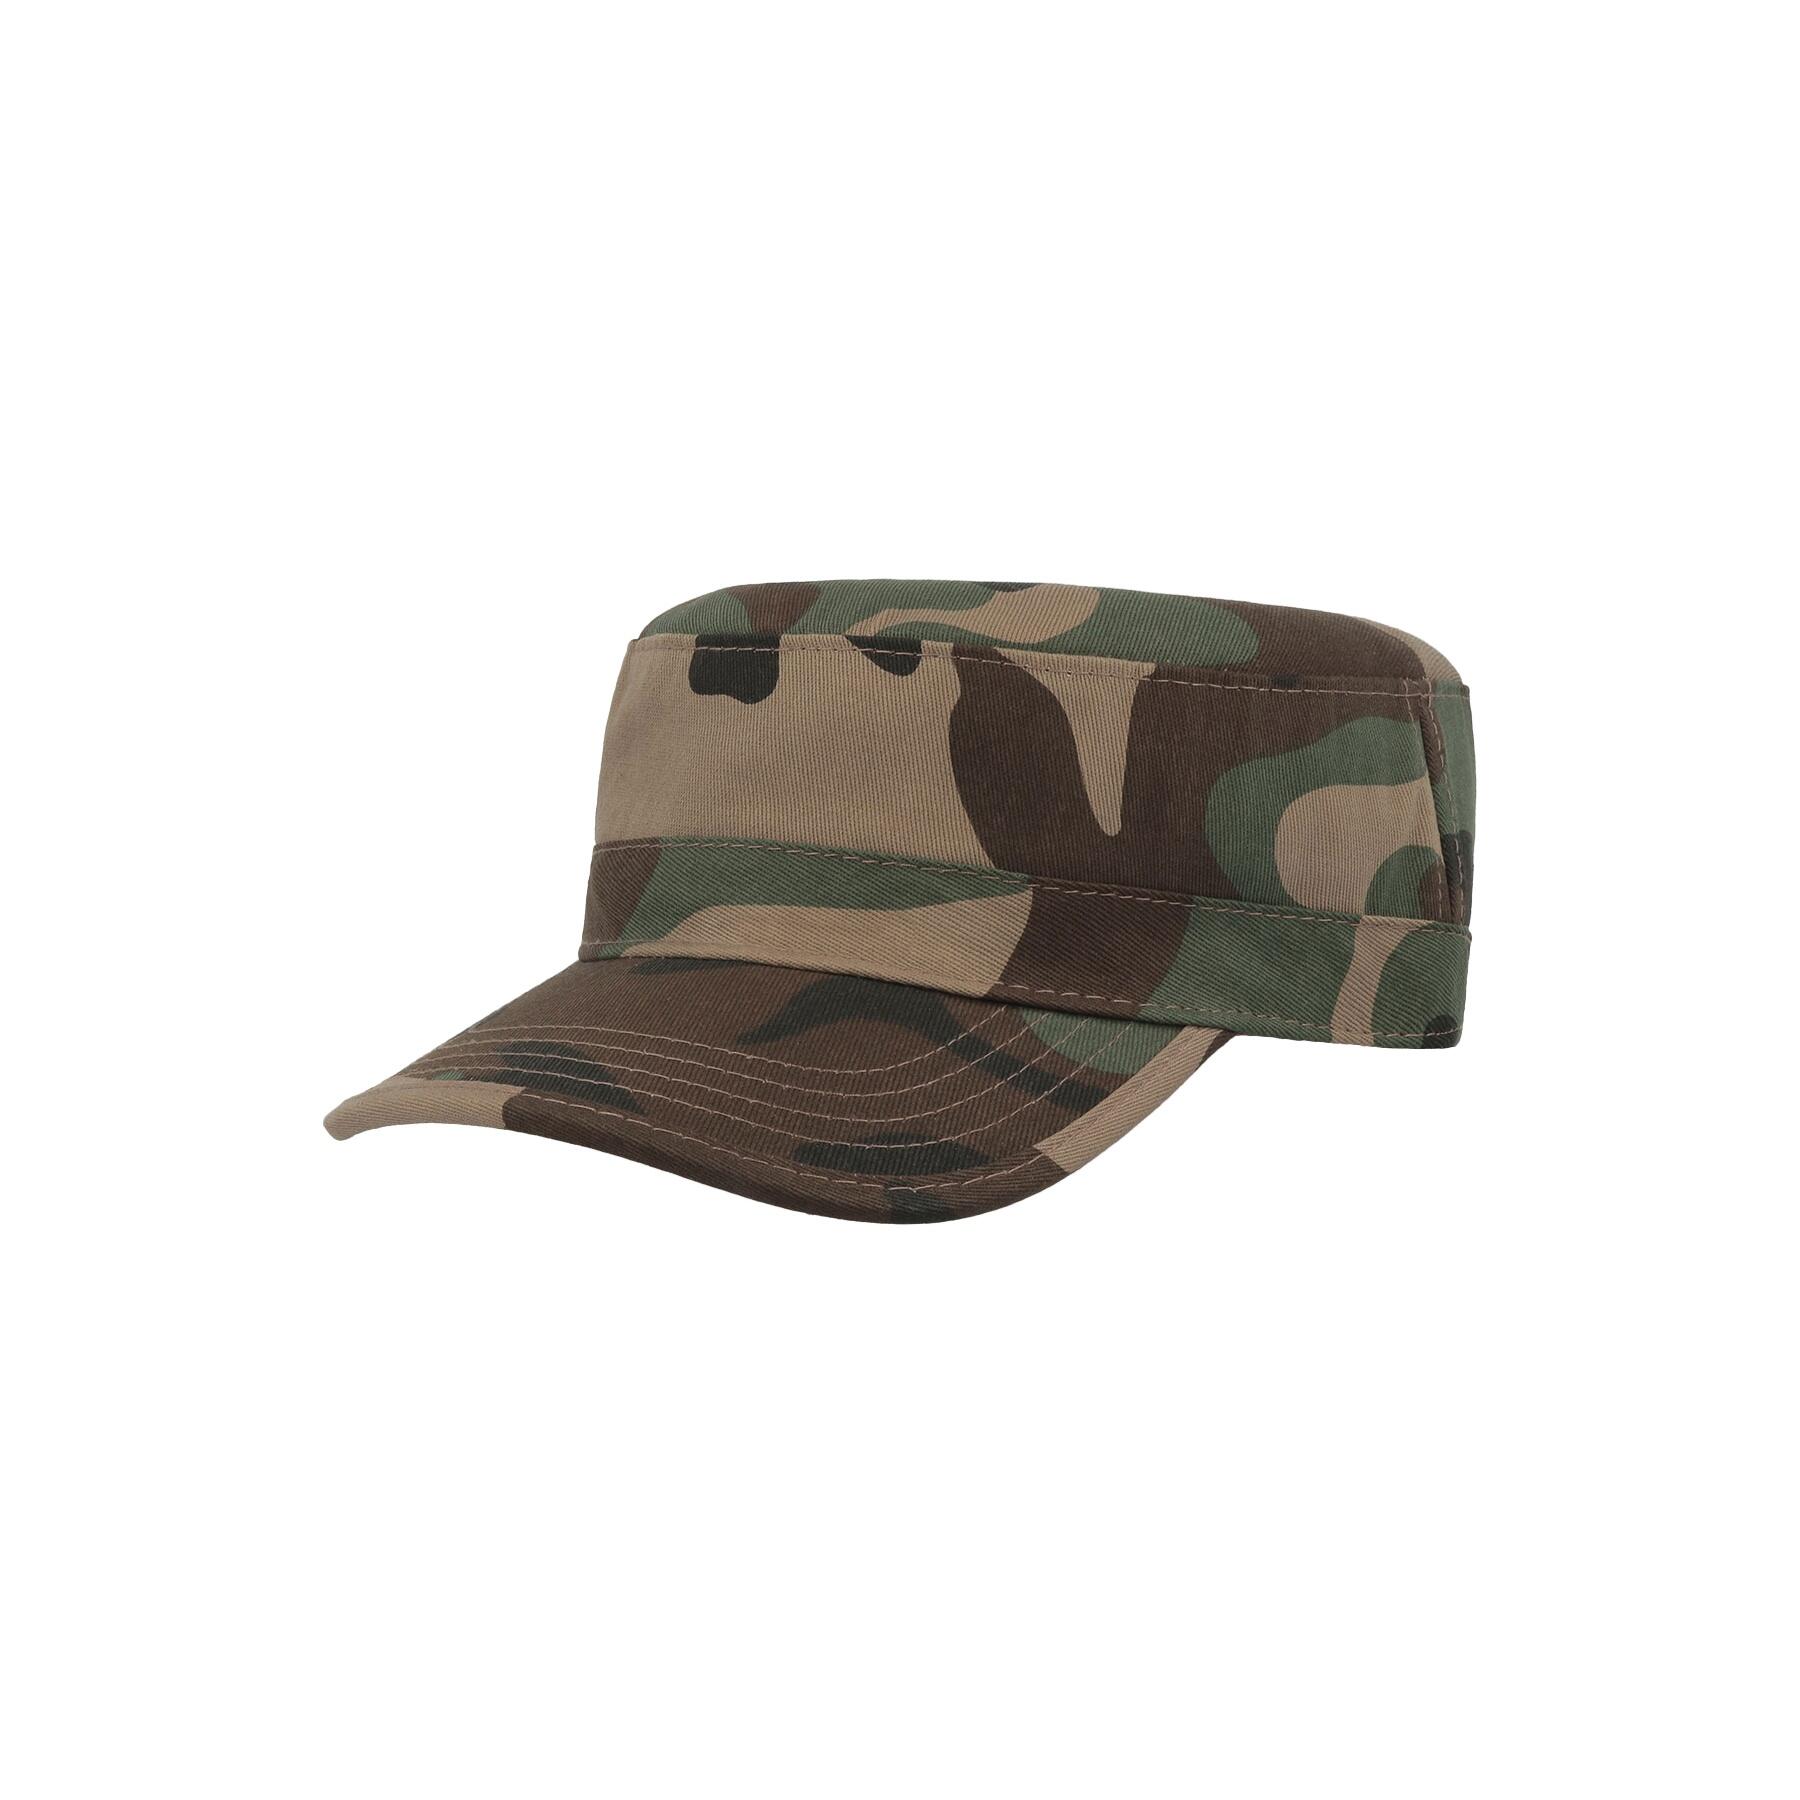 ATLANTIS Tank Brushed Cotton Military Cap (Camouflage)